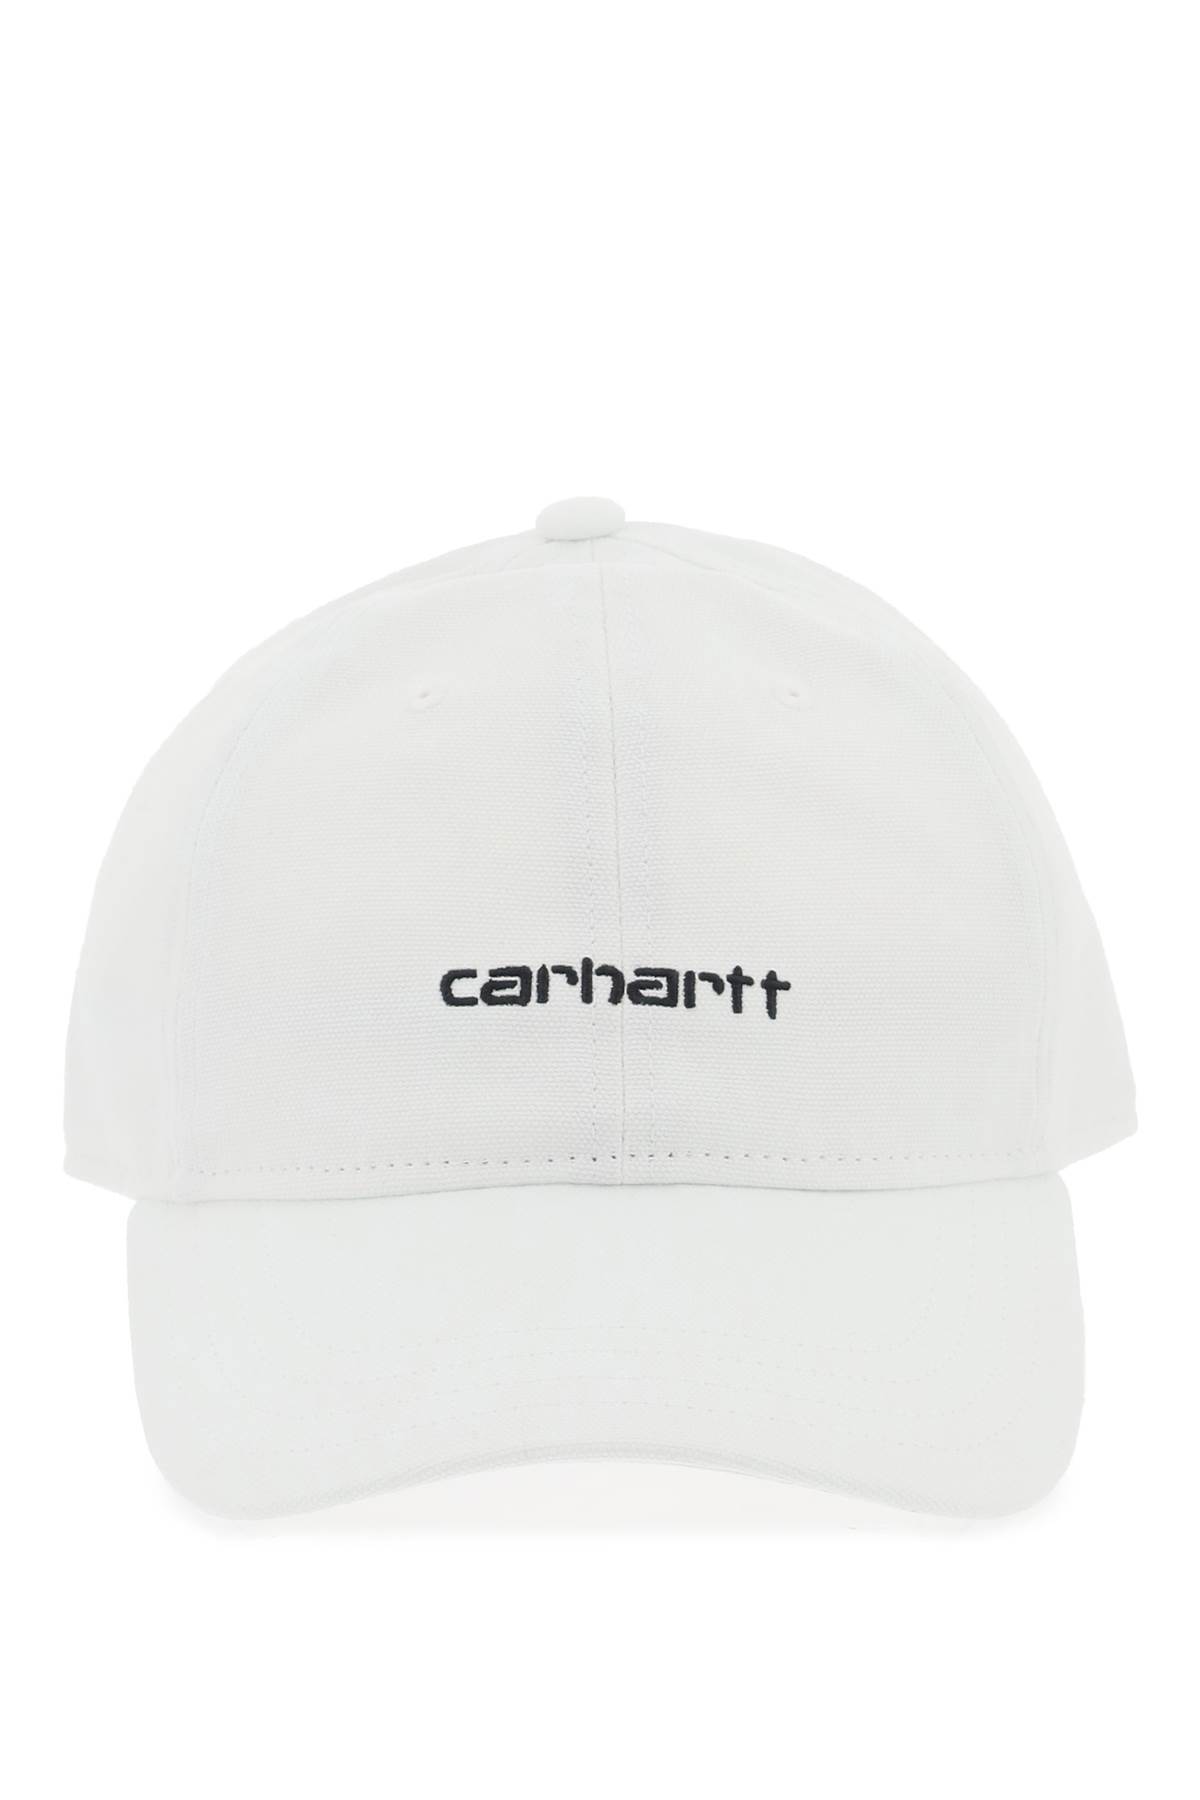 Carhartt Canvas Script Baseball Cap In White Black (white)